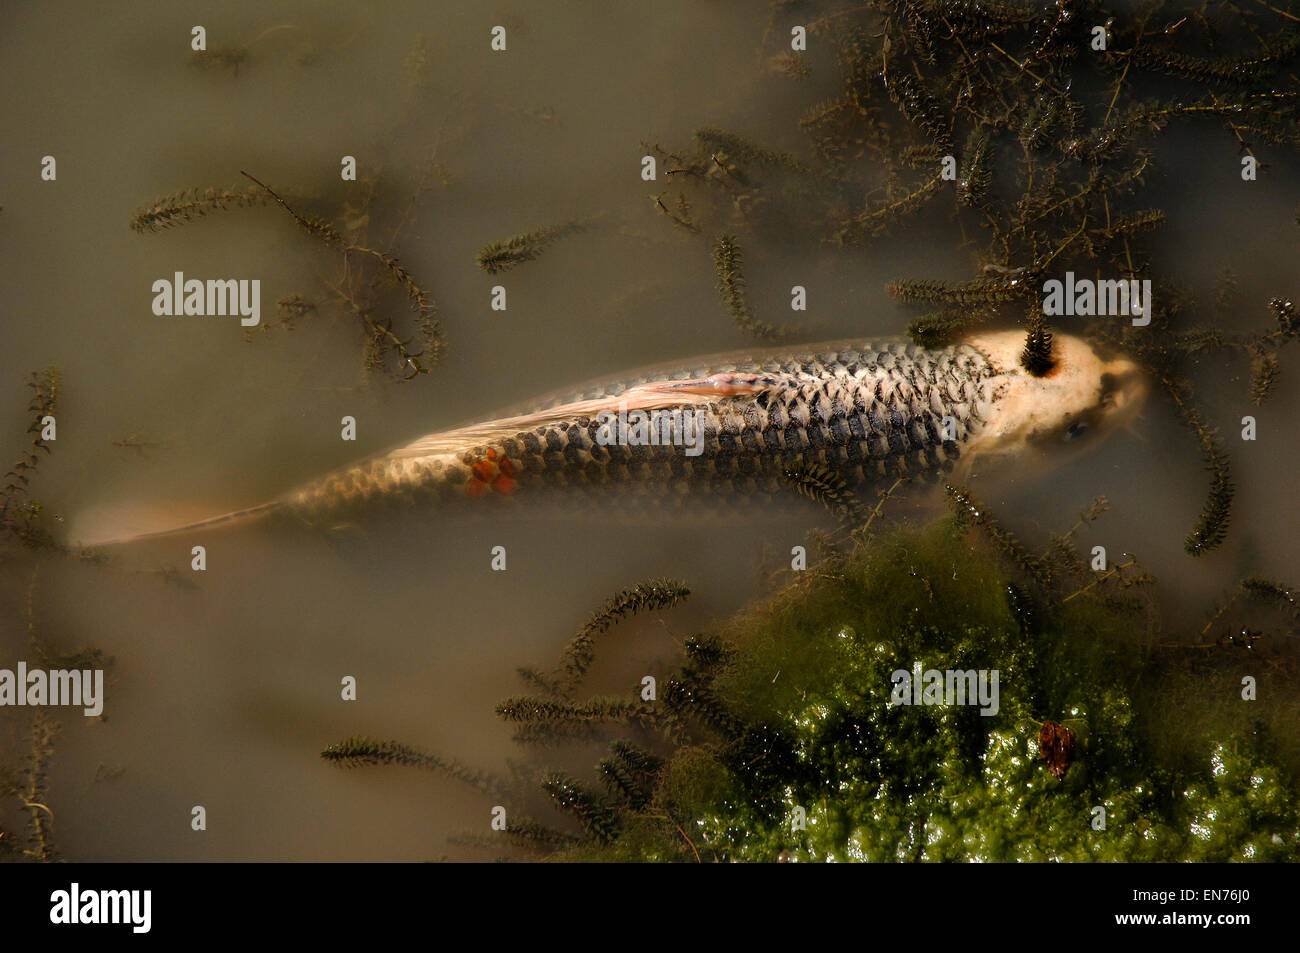 Single koi carp kigoi swiming in pond Stock Photo